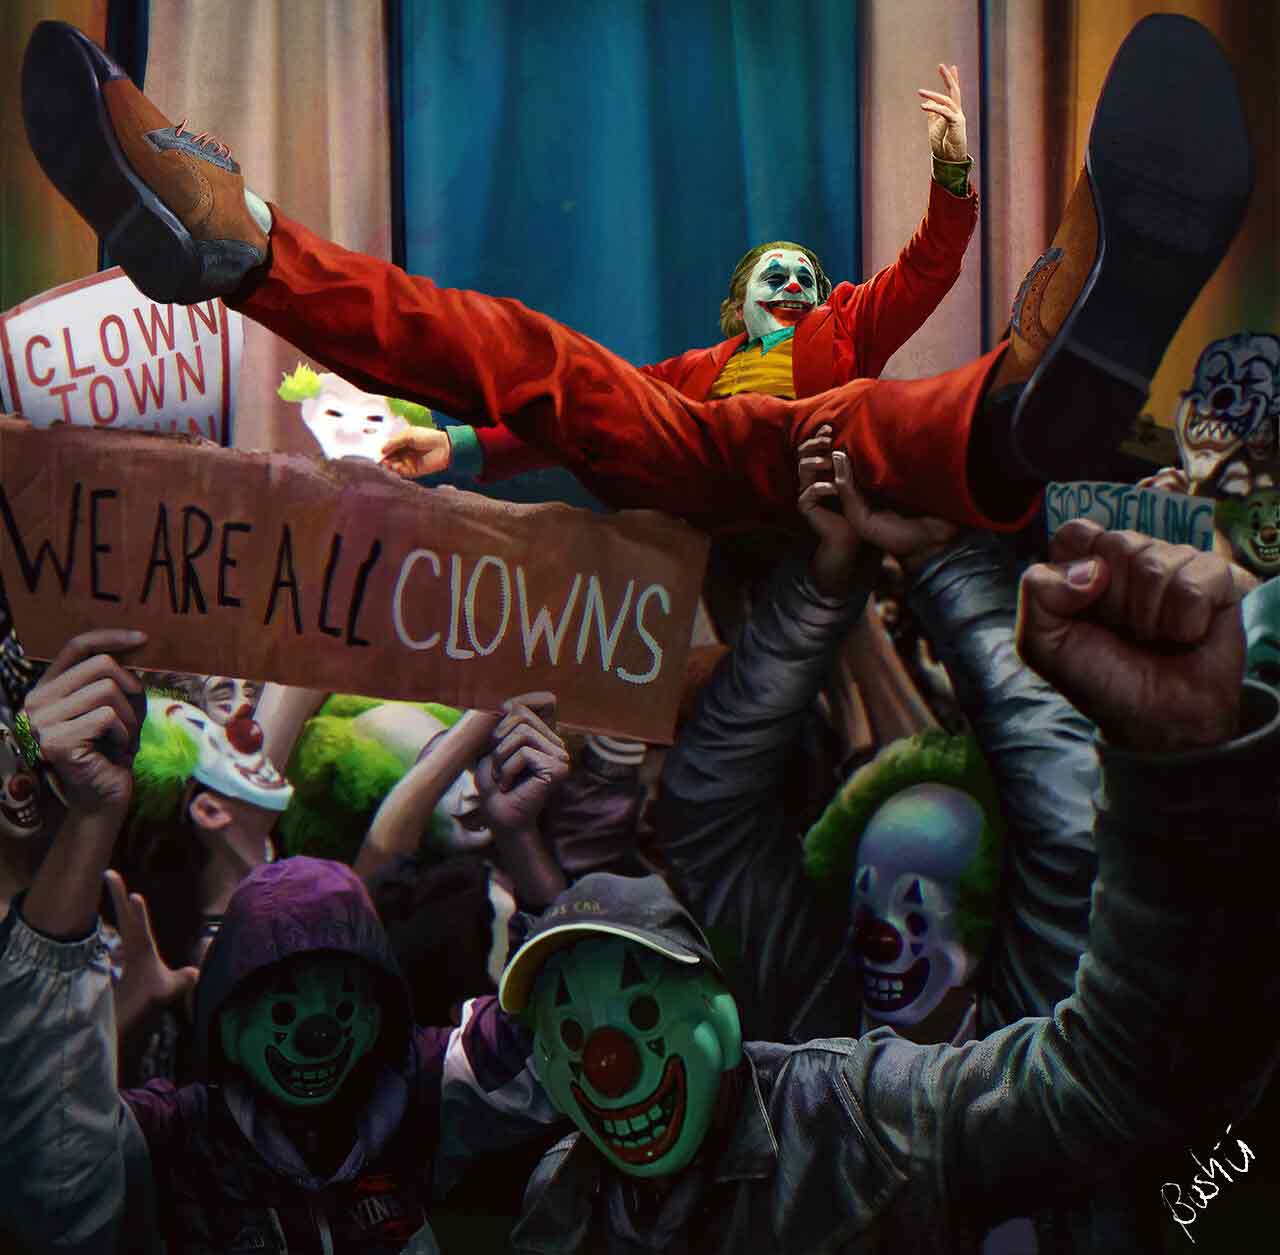 Joker es tomado como símbolo de protesta social.